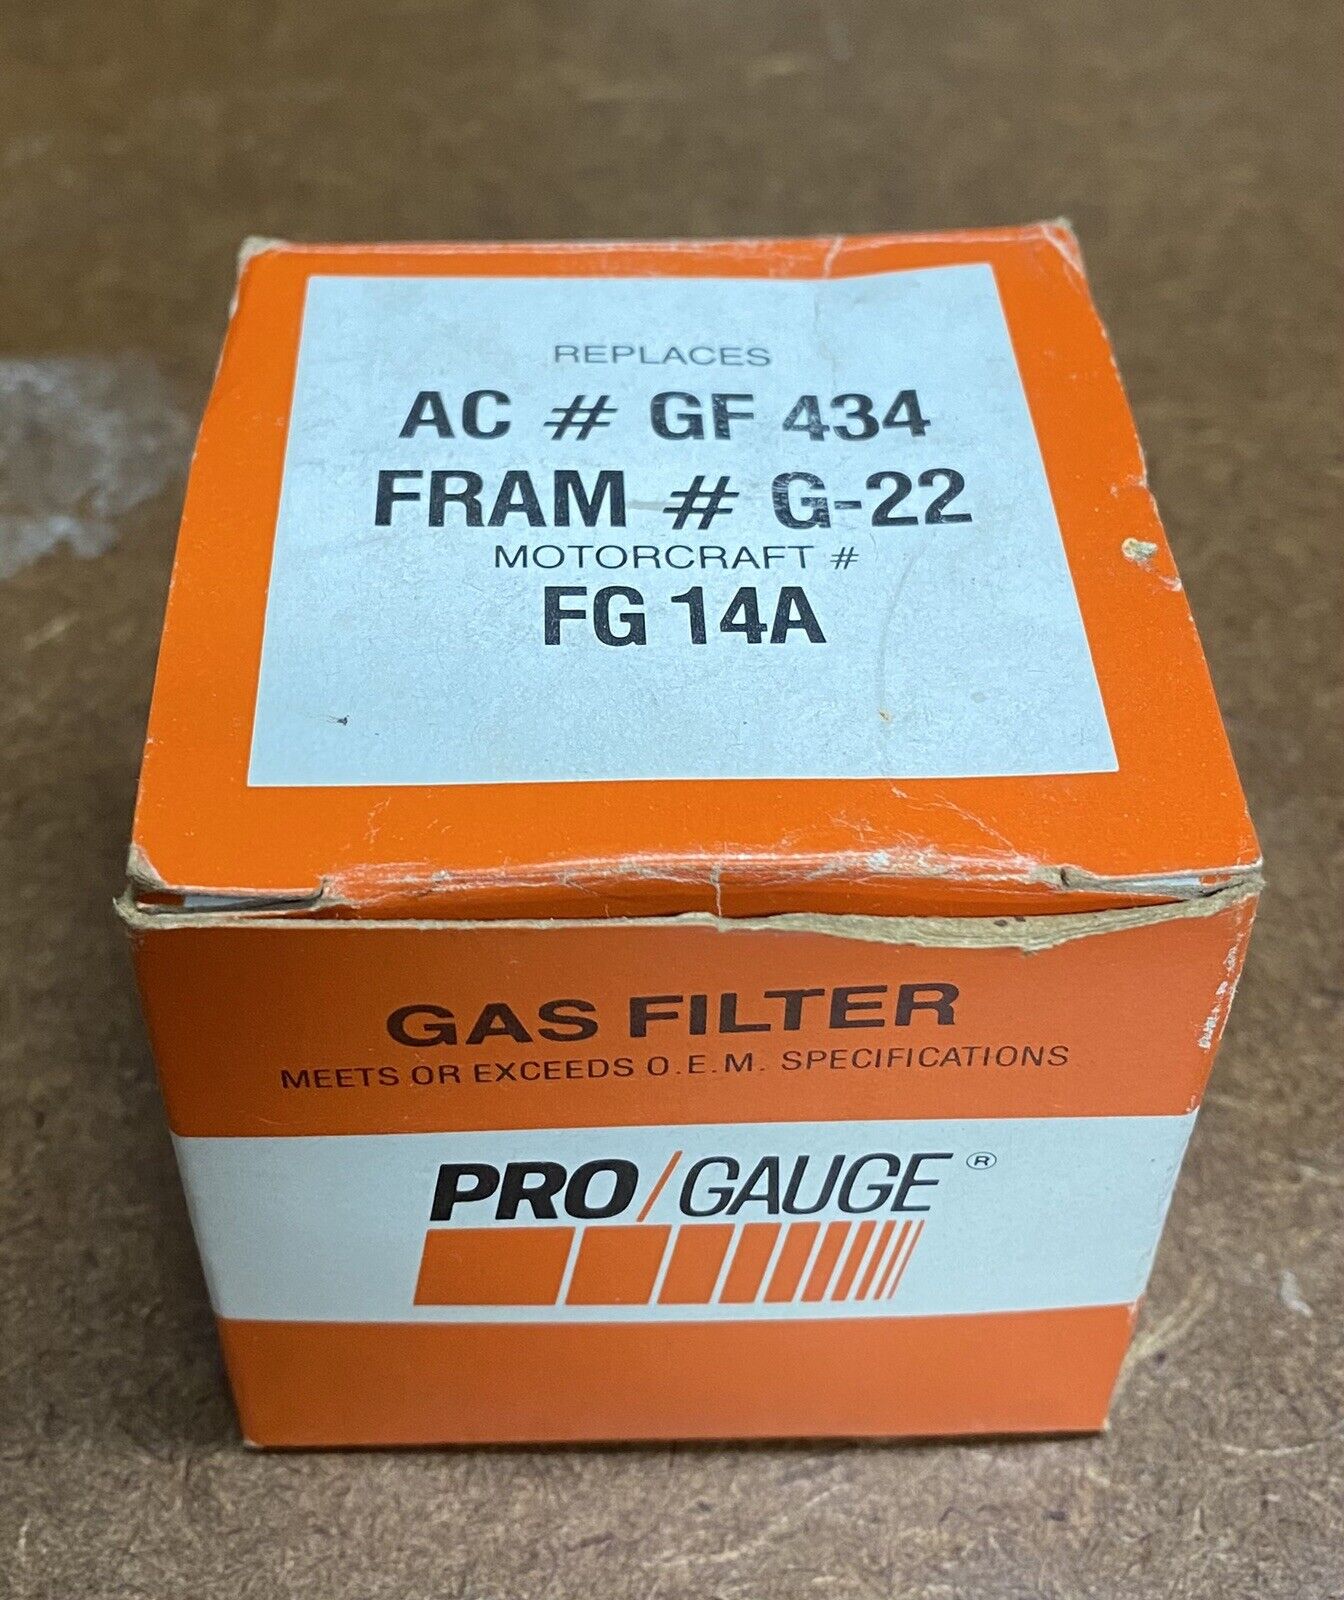 Gas Fuel Filter Pro Gauge NOS AC GF 434, Fram G-22, Motorcraft FG 14A